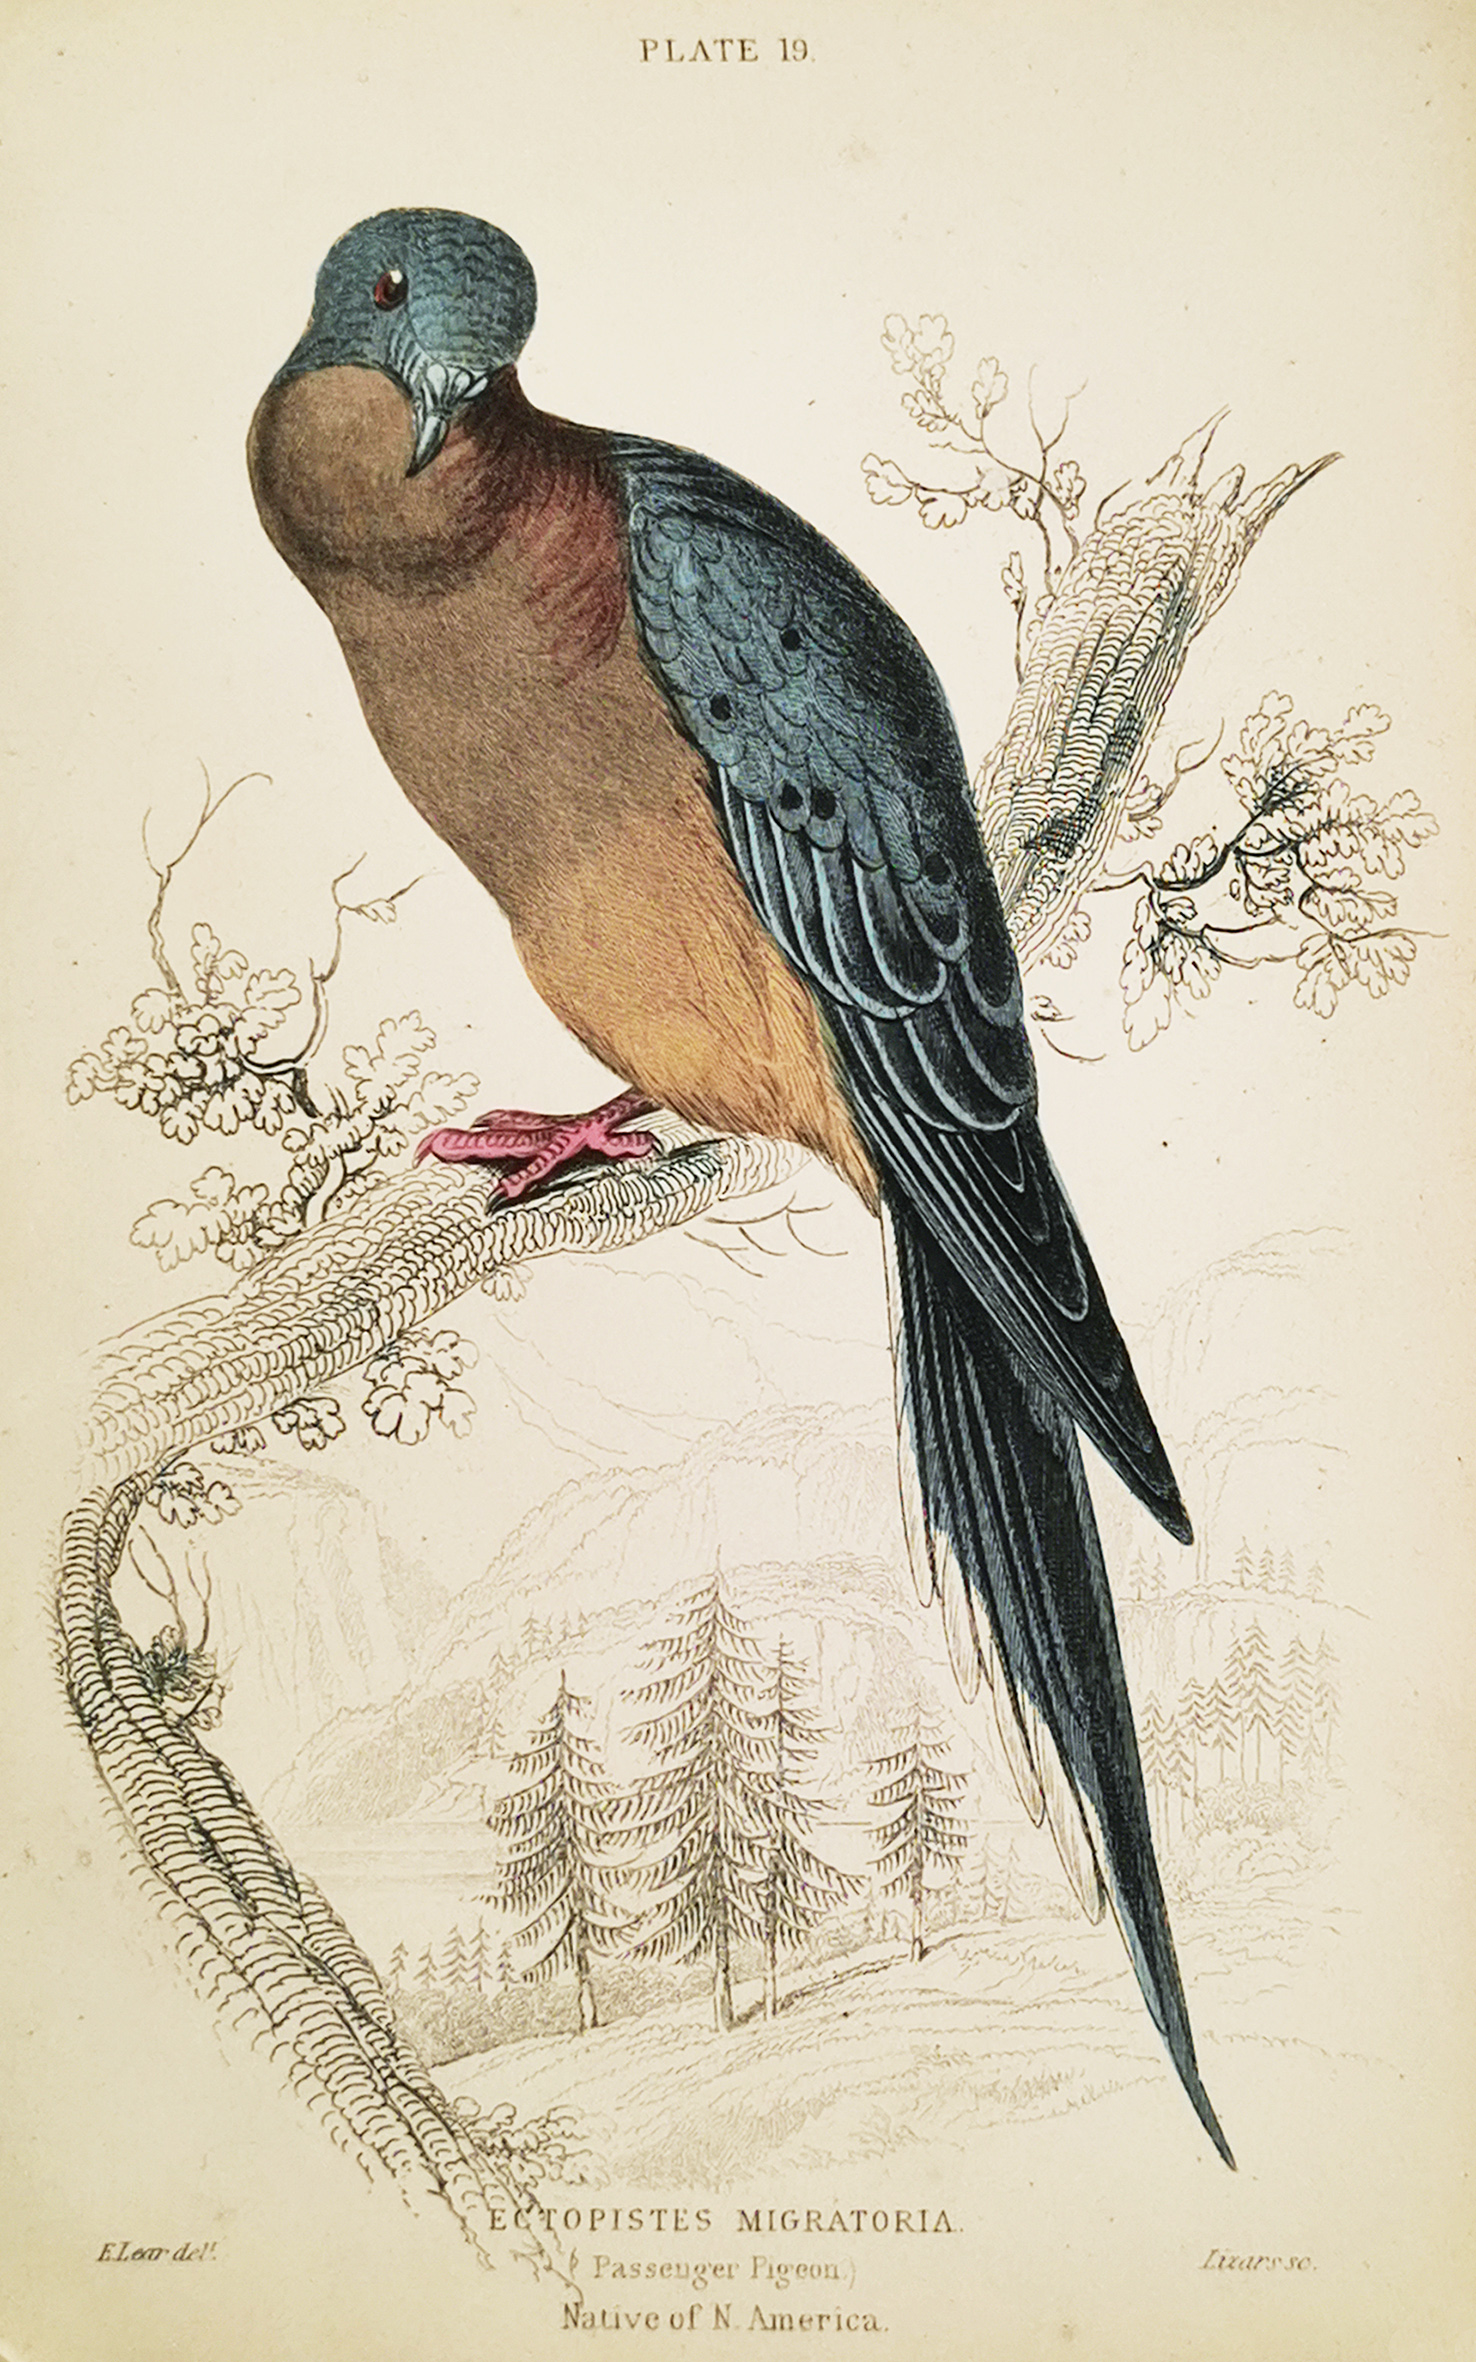 Ectopistes Migratoria.(Passenger pigeon) Native of N.America. - Antique Print from 1843